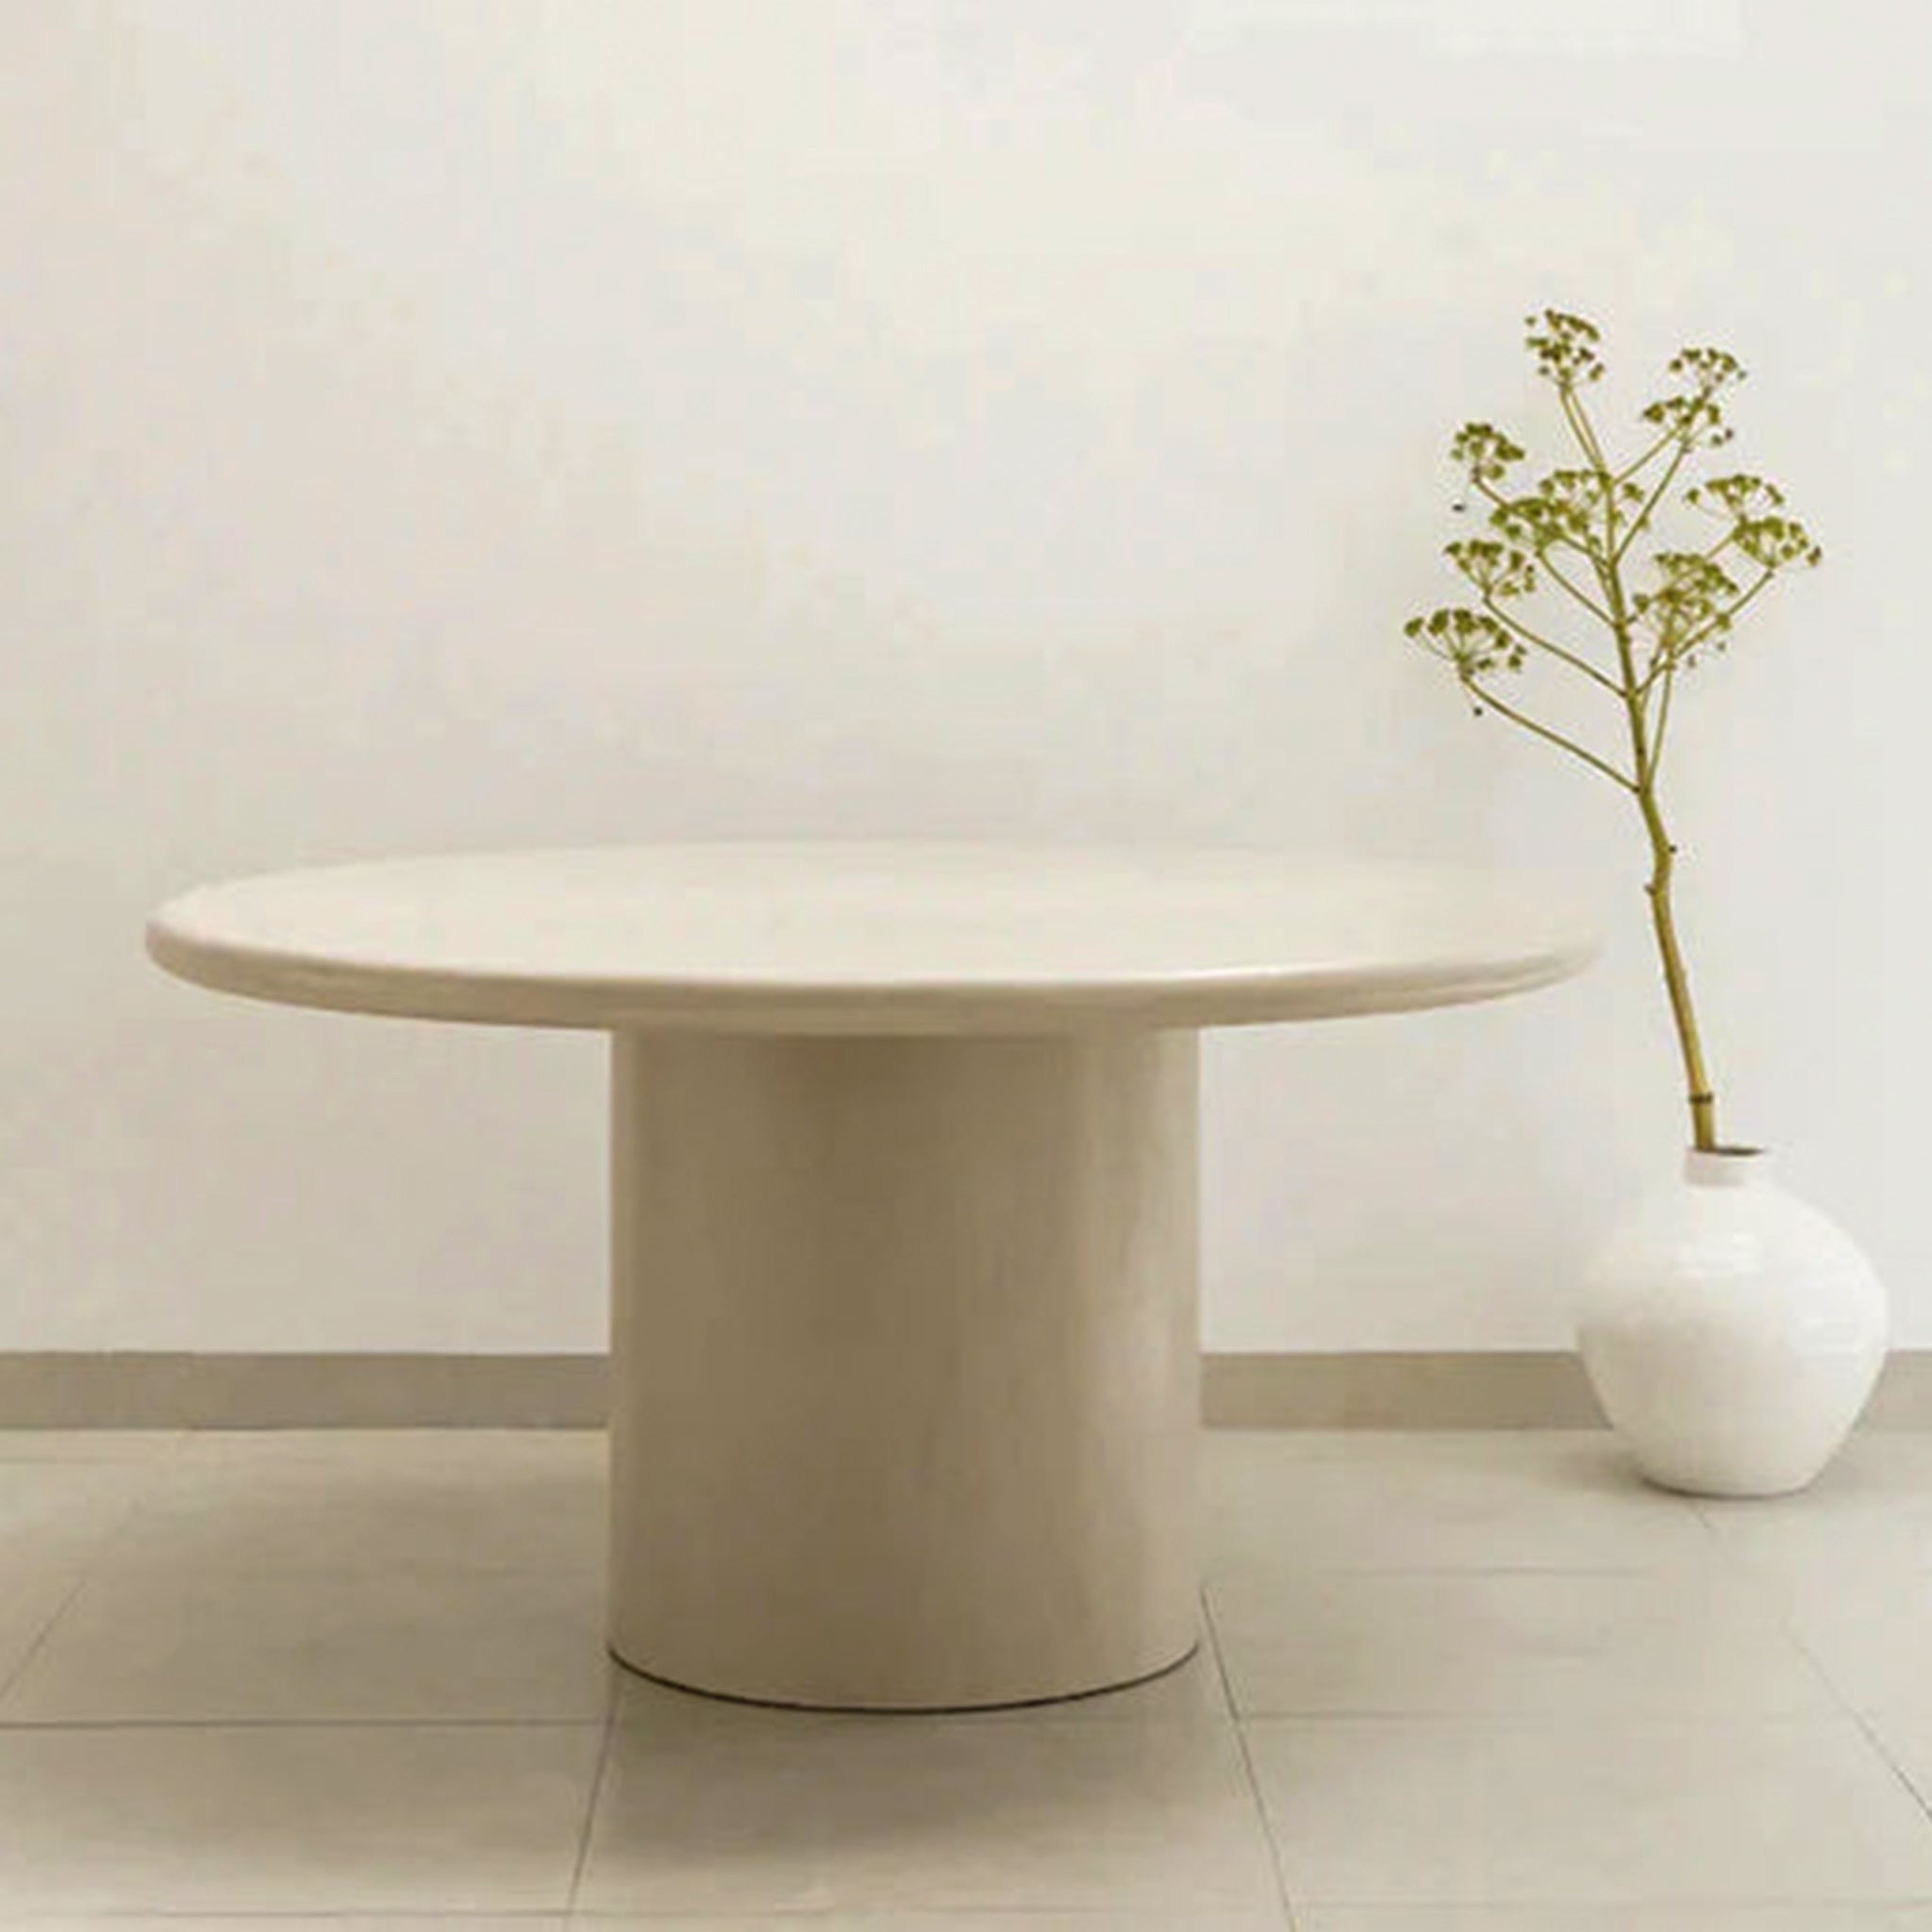 Modern beige dining table with a sleek, round design